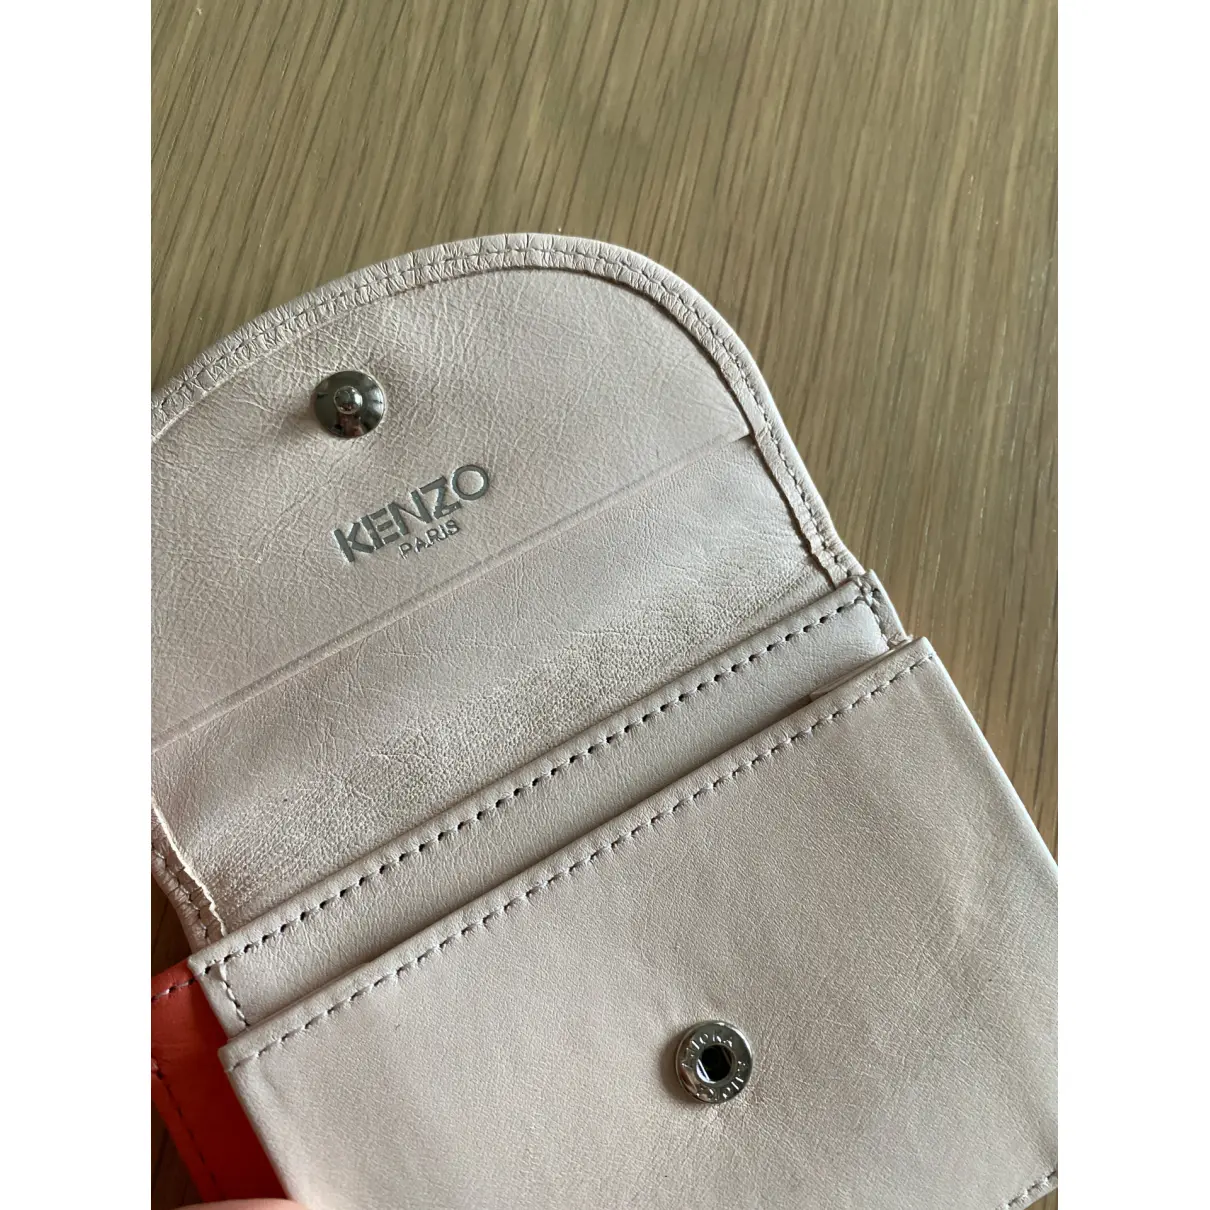 Buy Kenzo Leather wallet online